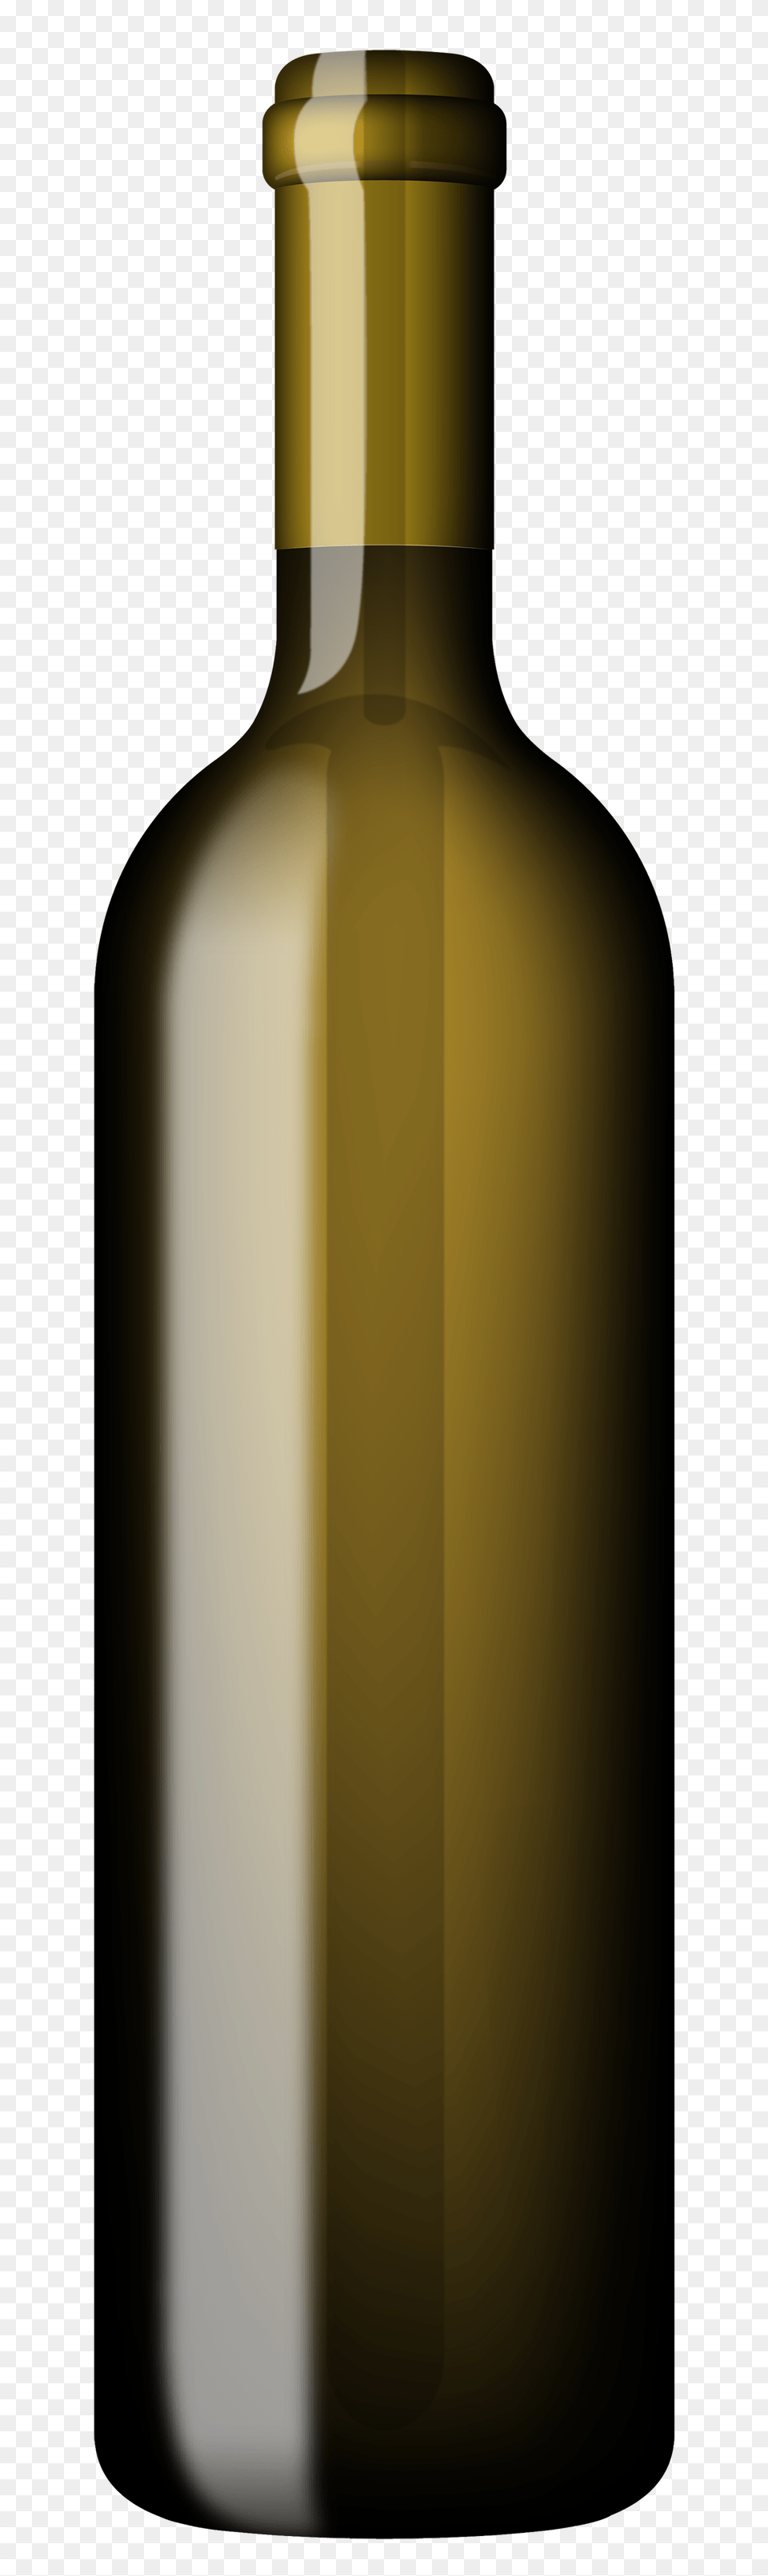 Green Bottle Of Wine Clipart, Alcohol, Beverage, Liquor, Wine Bottle Free Png Download